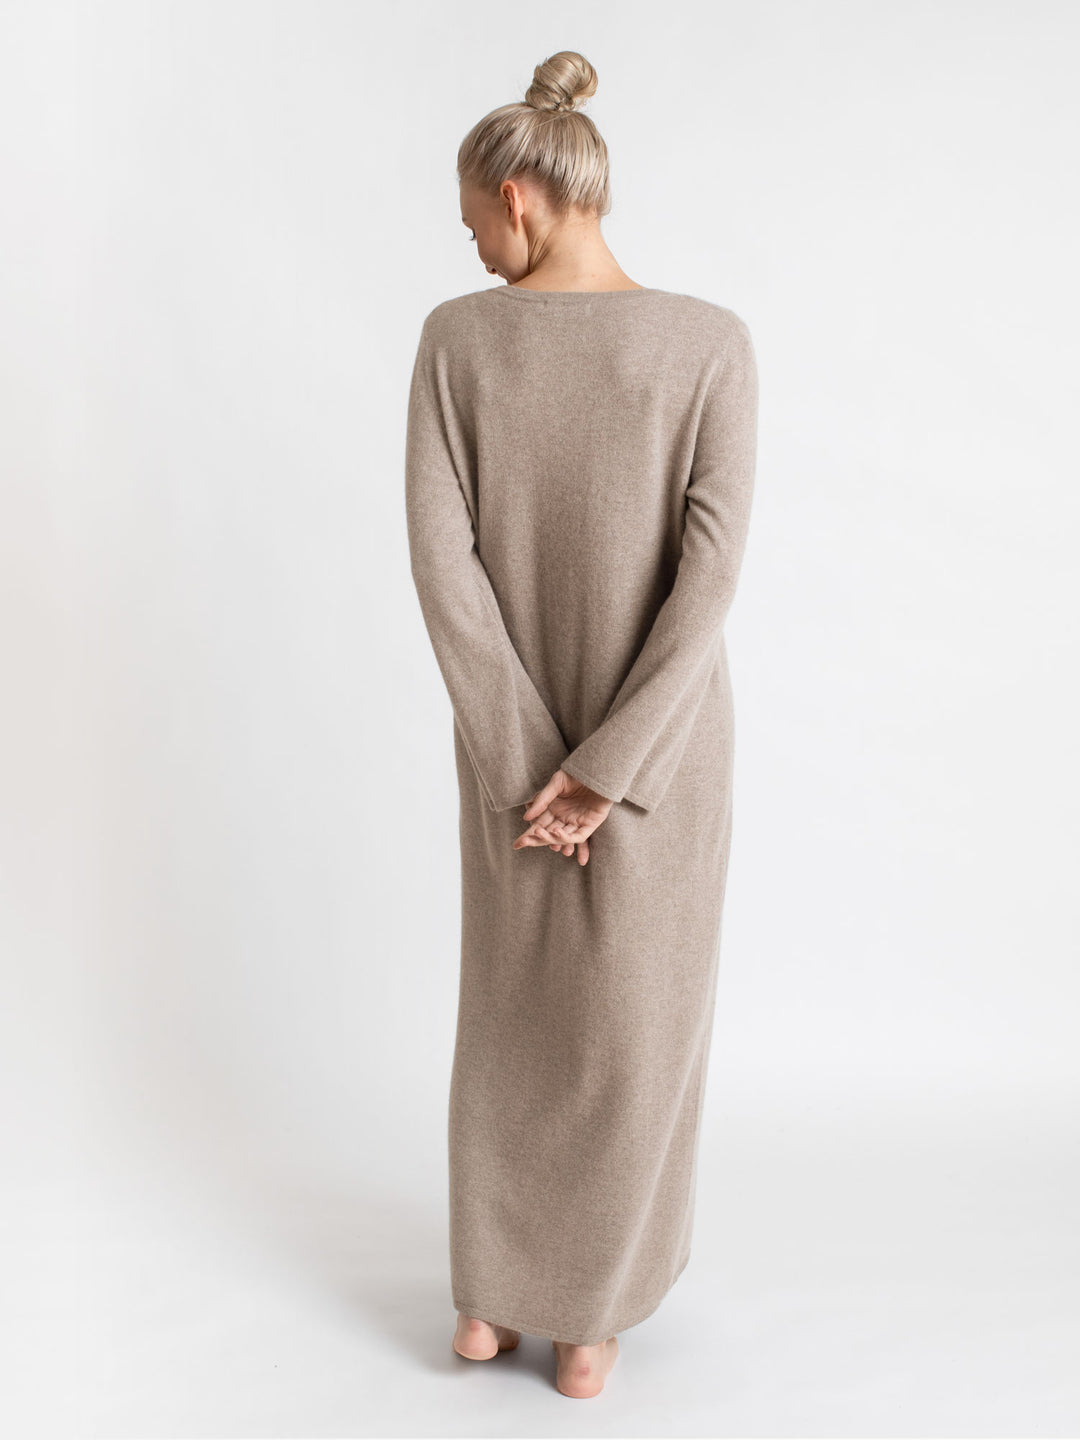 cashmere dress Bohéme Maxi by Kashmina 100% cashmere